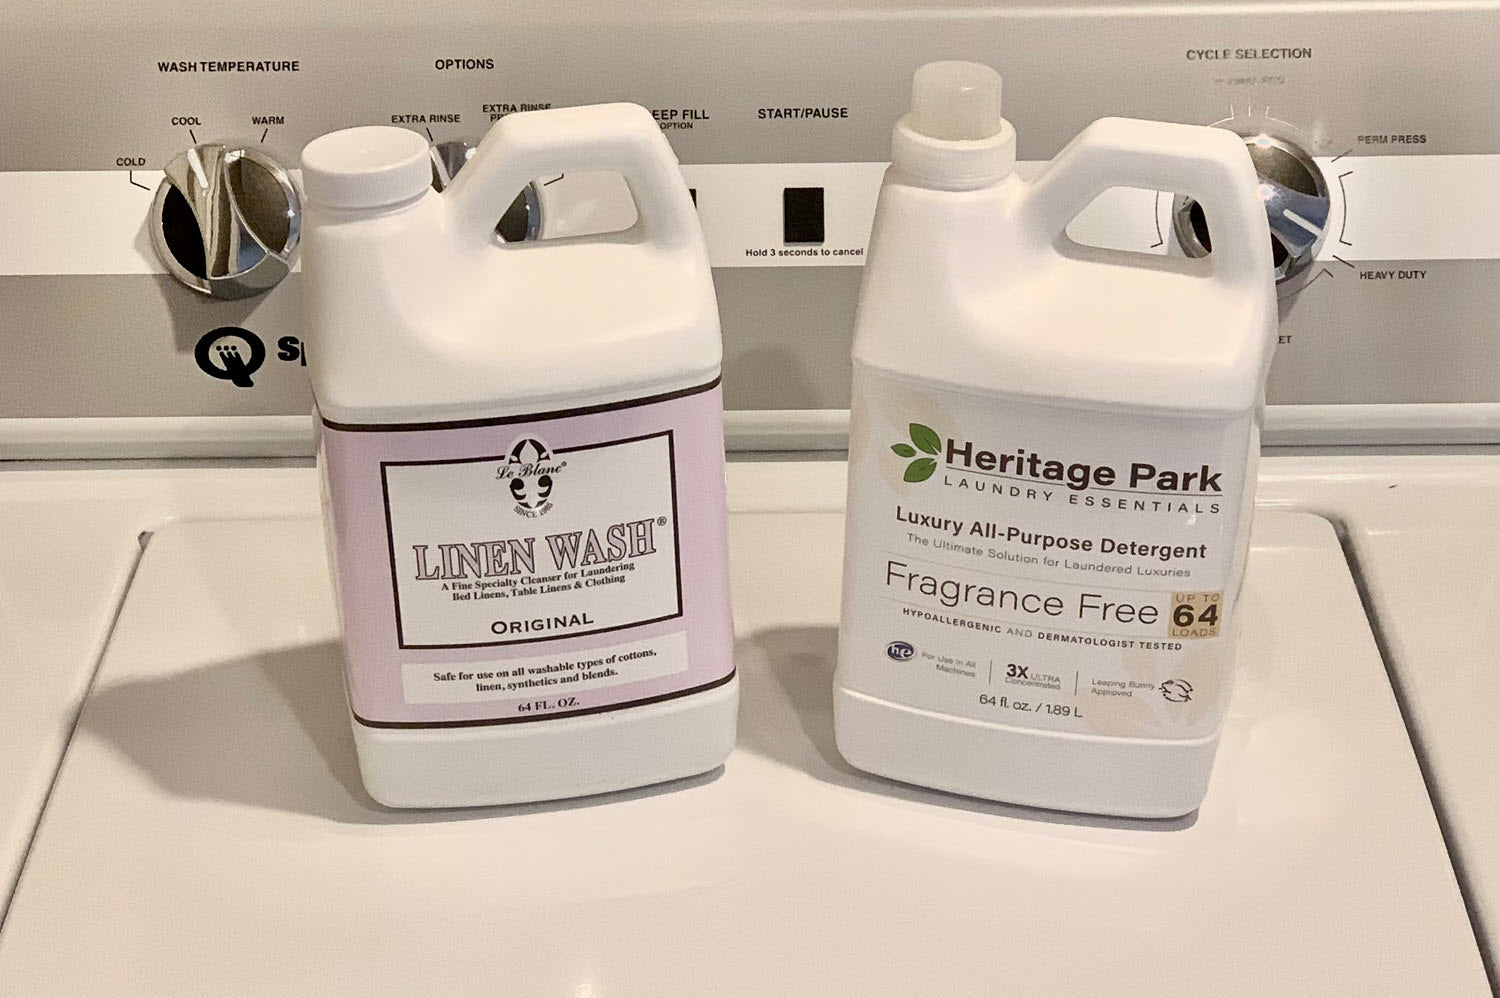 Comparing LeBlanc Linen Wash Detergent to Heritage Park Luxury All-Purpose Detergent